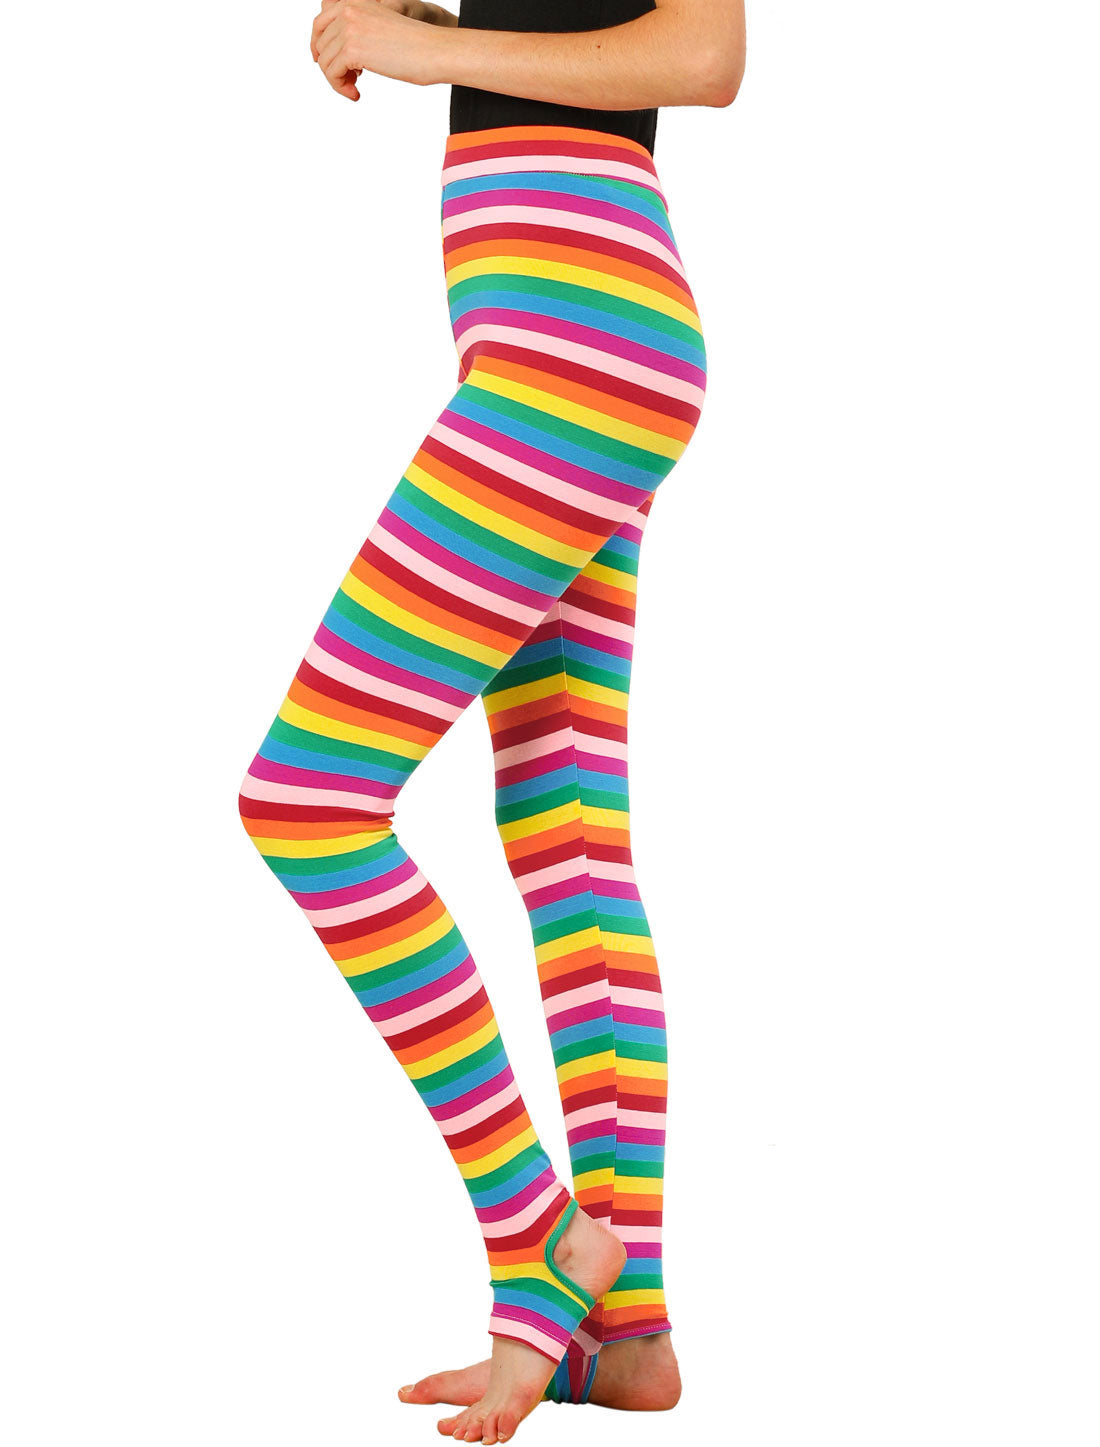 Allegra K Printed High Elastic Waist Party Yoga Stirrup Pants Leggings